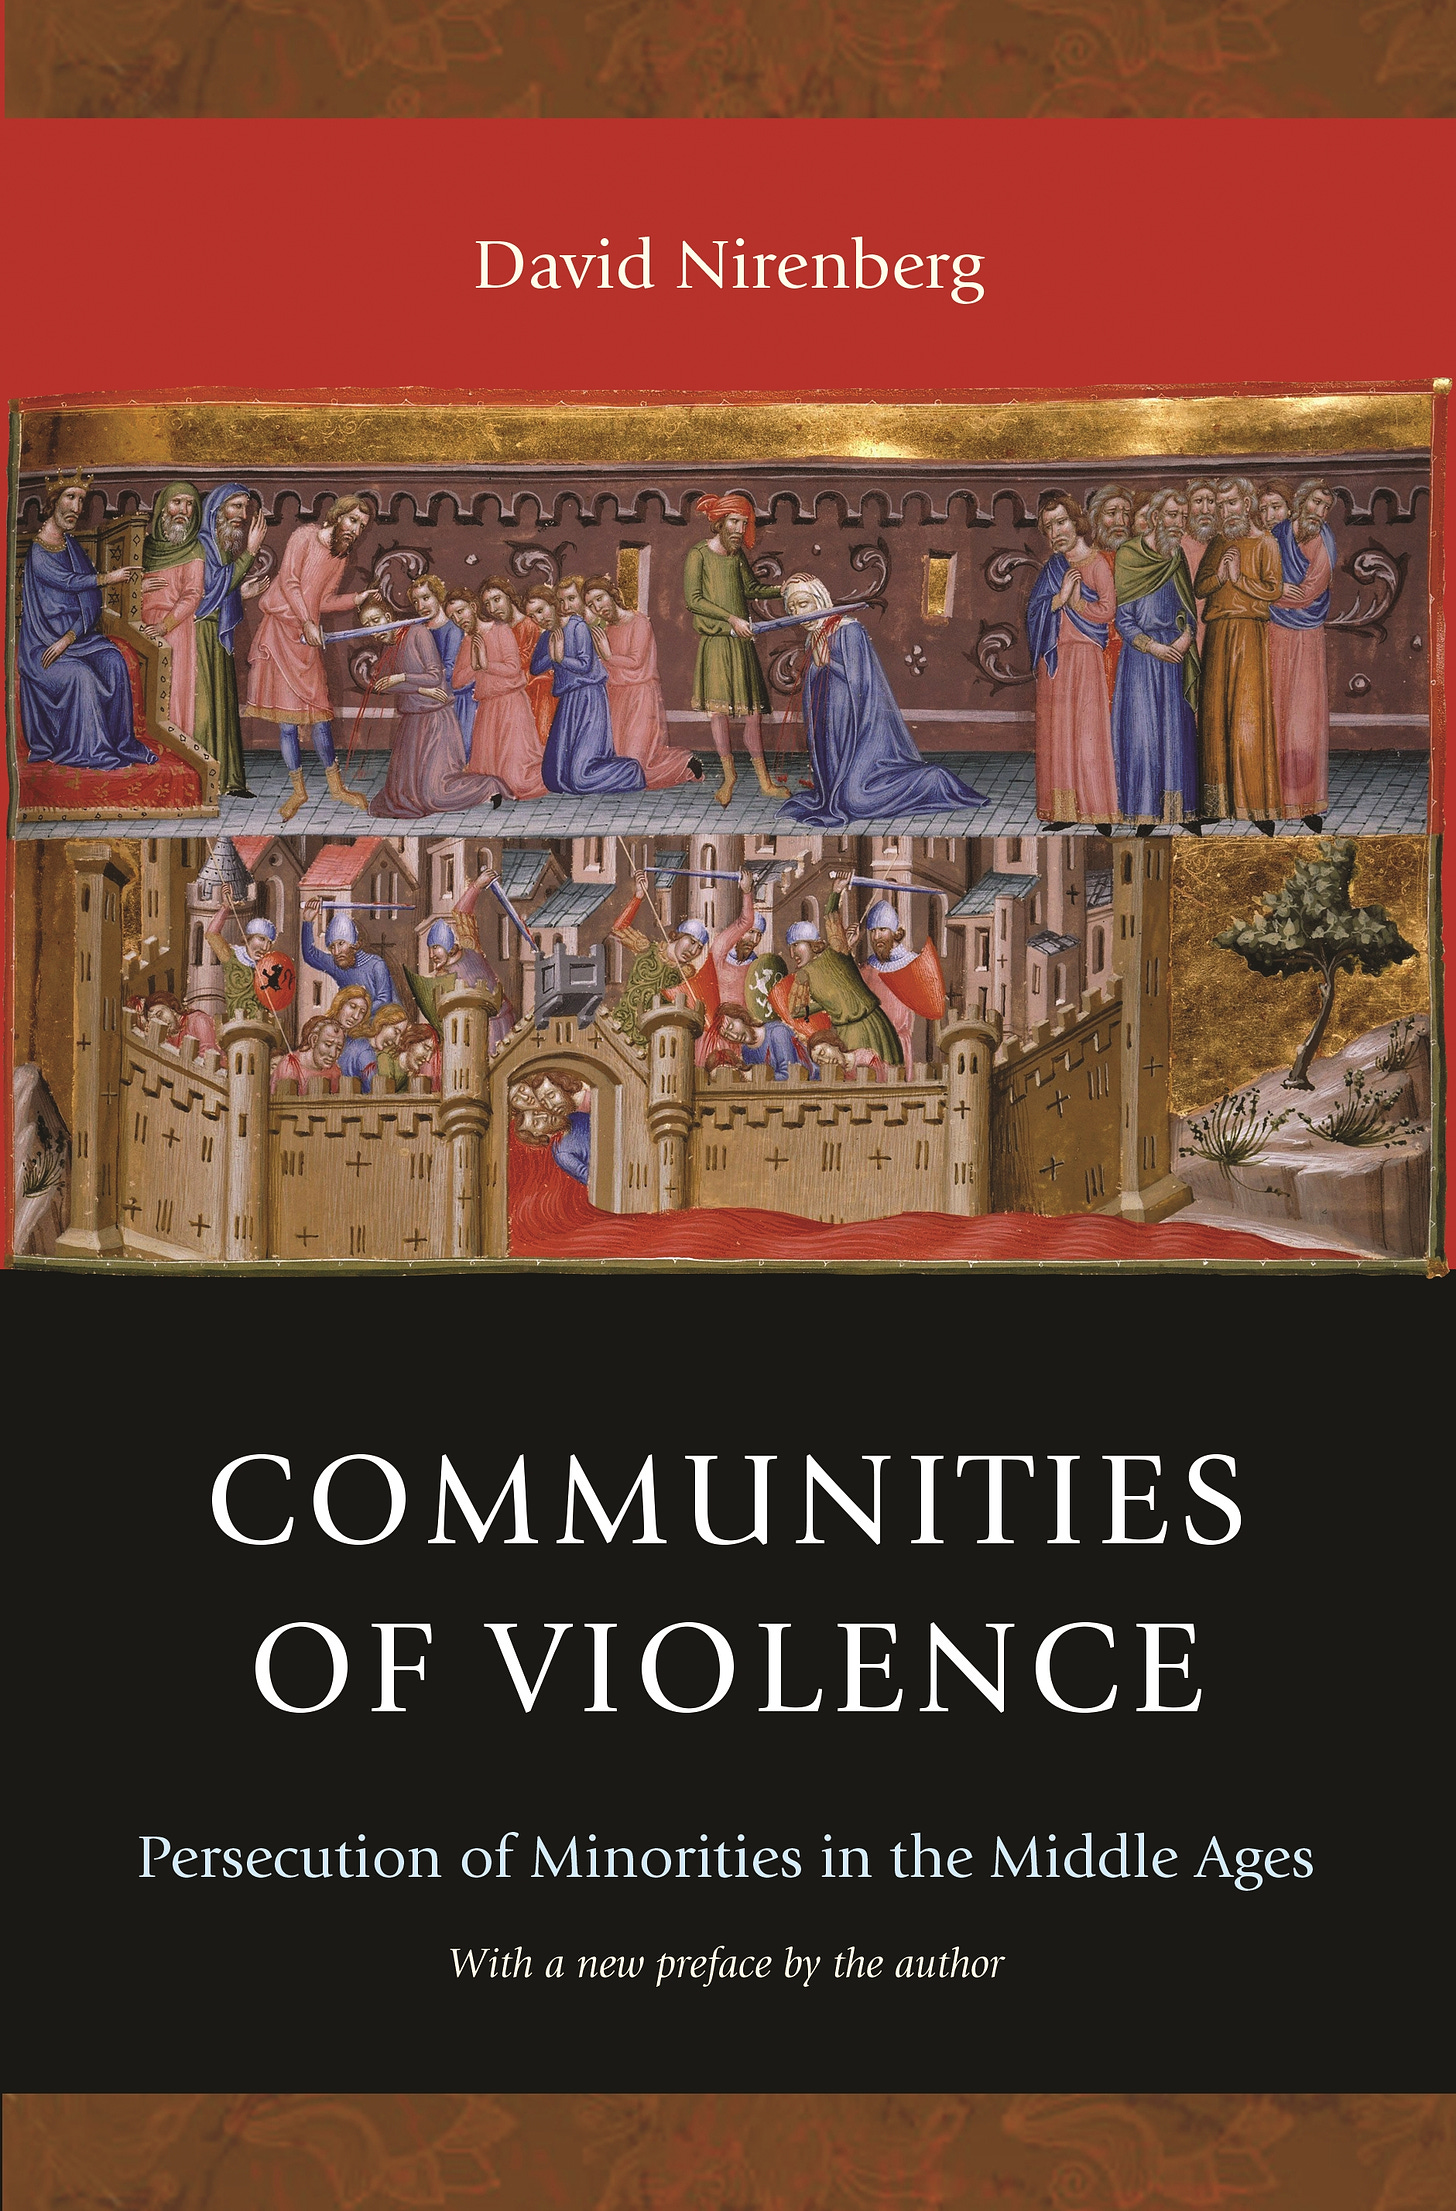 Cover image of David Nirenberg's Communities of Violence